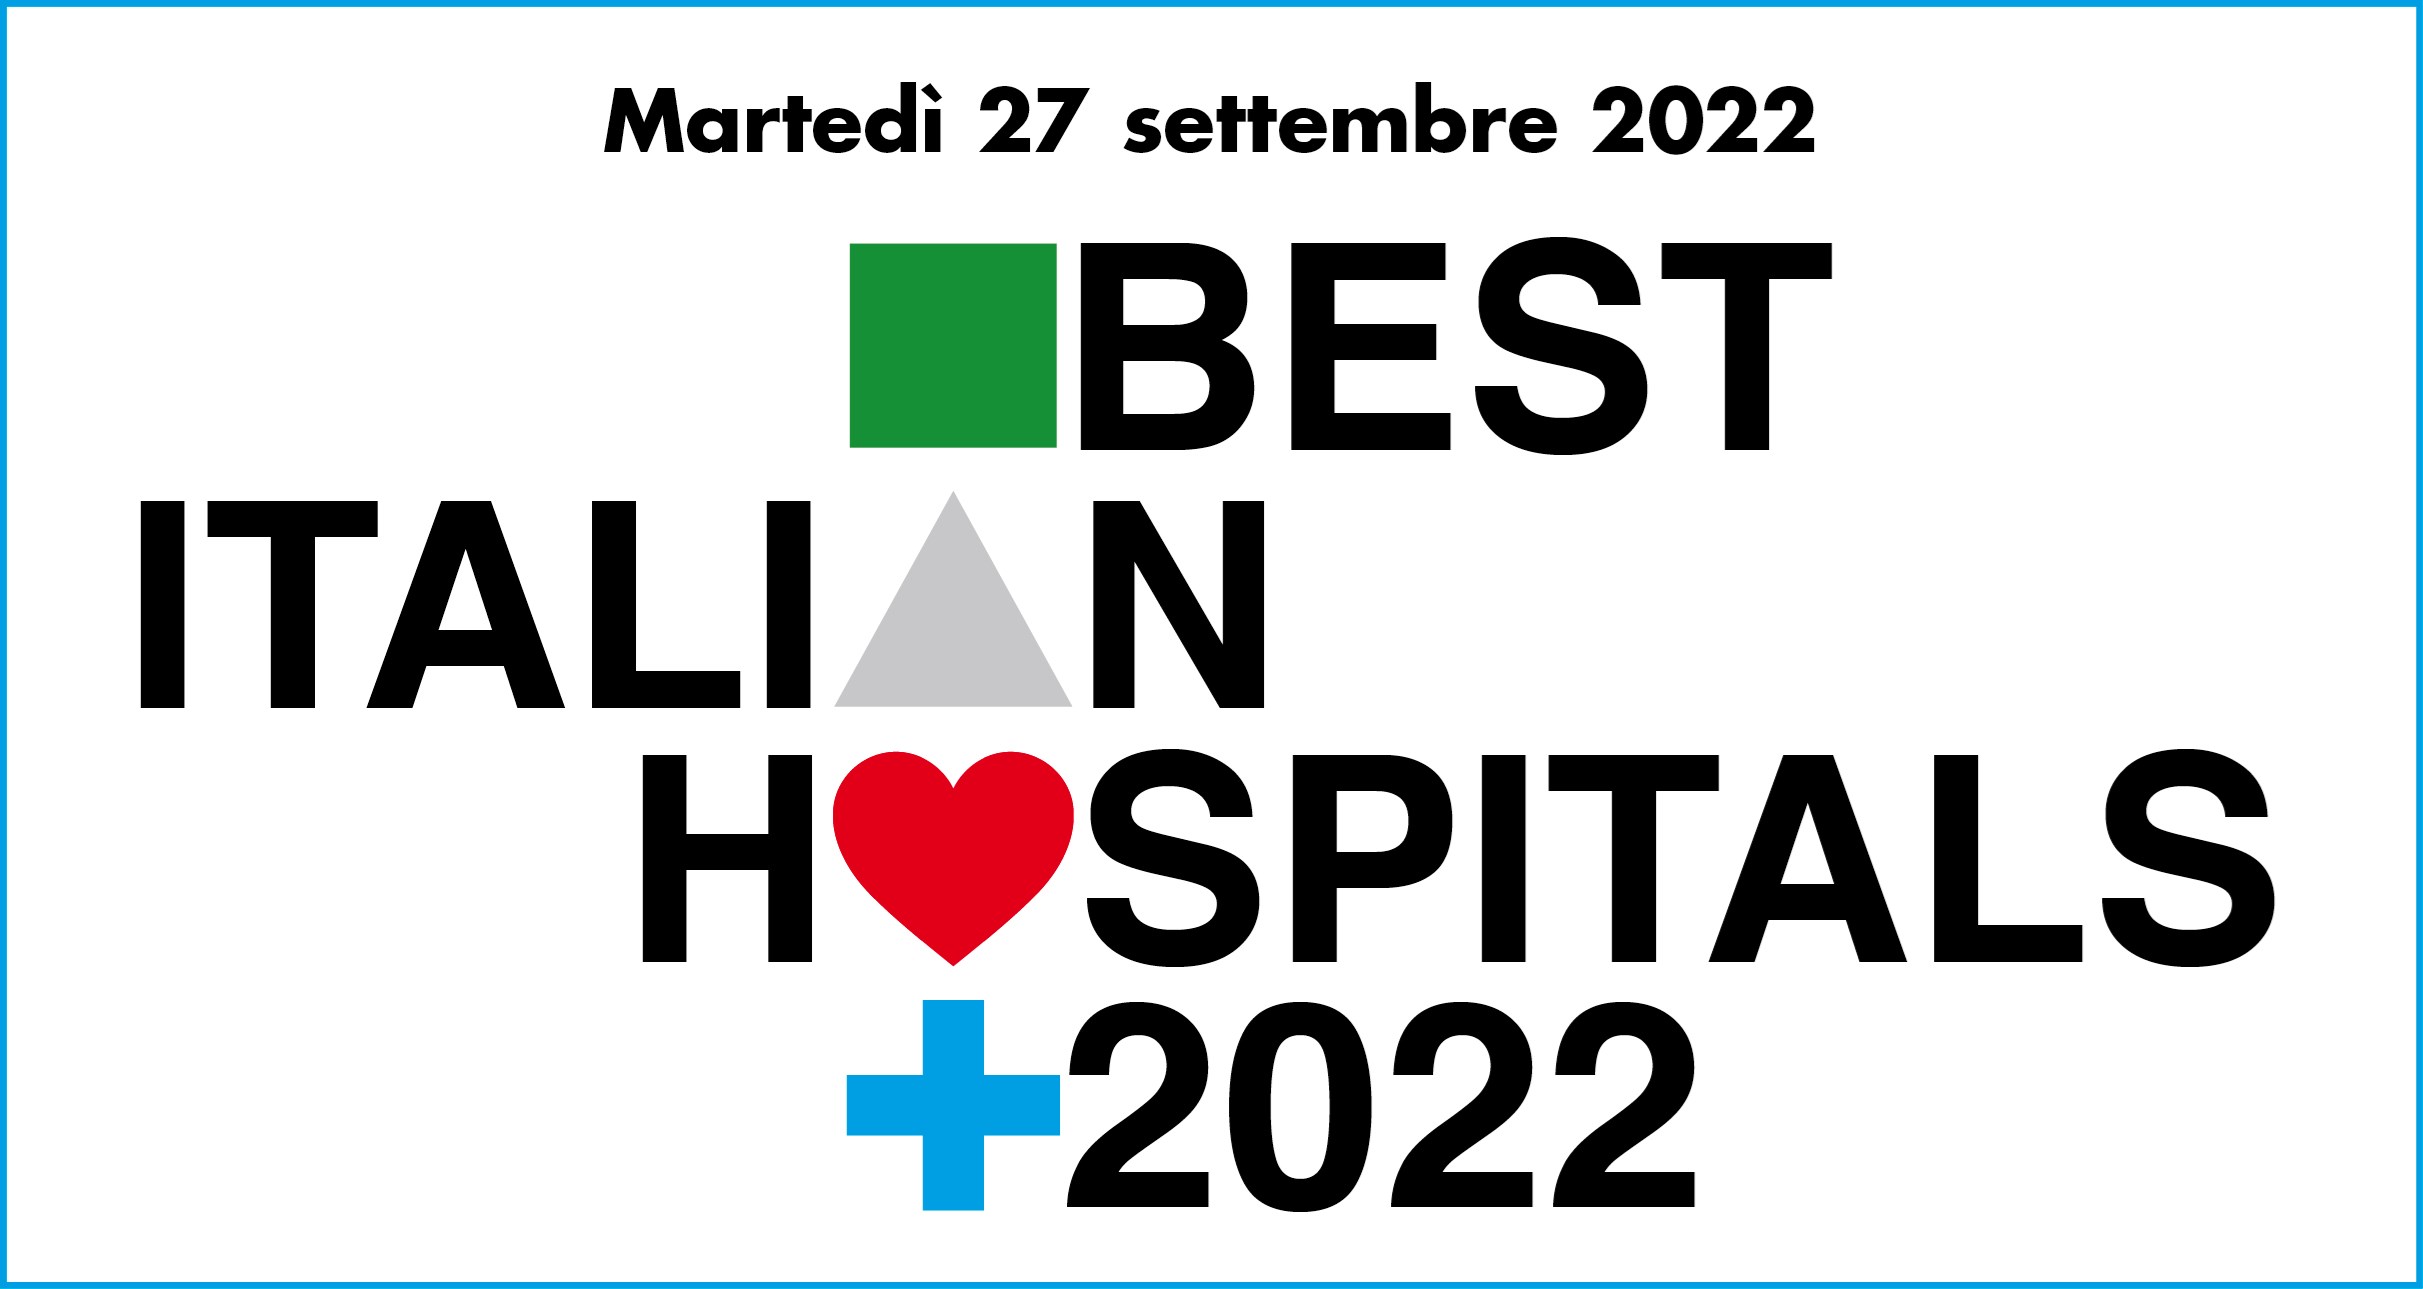 Best Italian Hospitals 2022